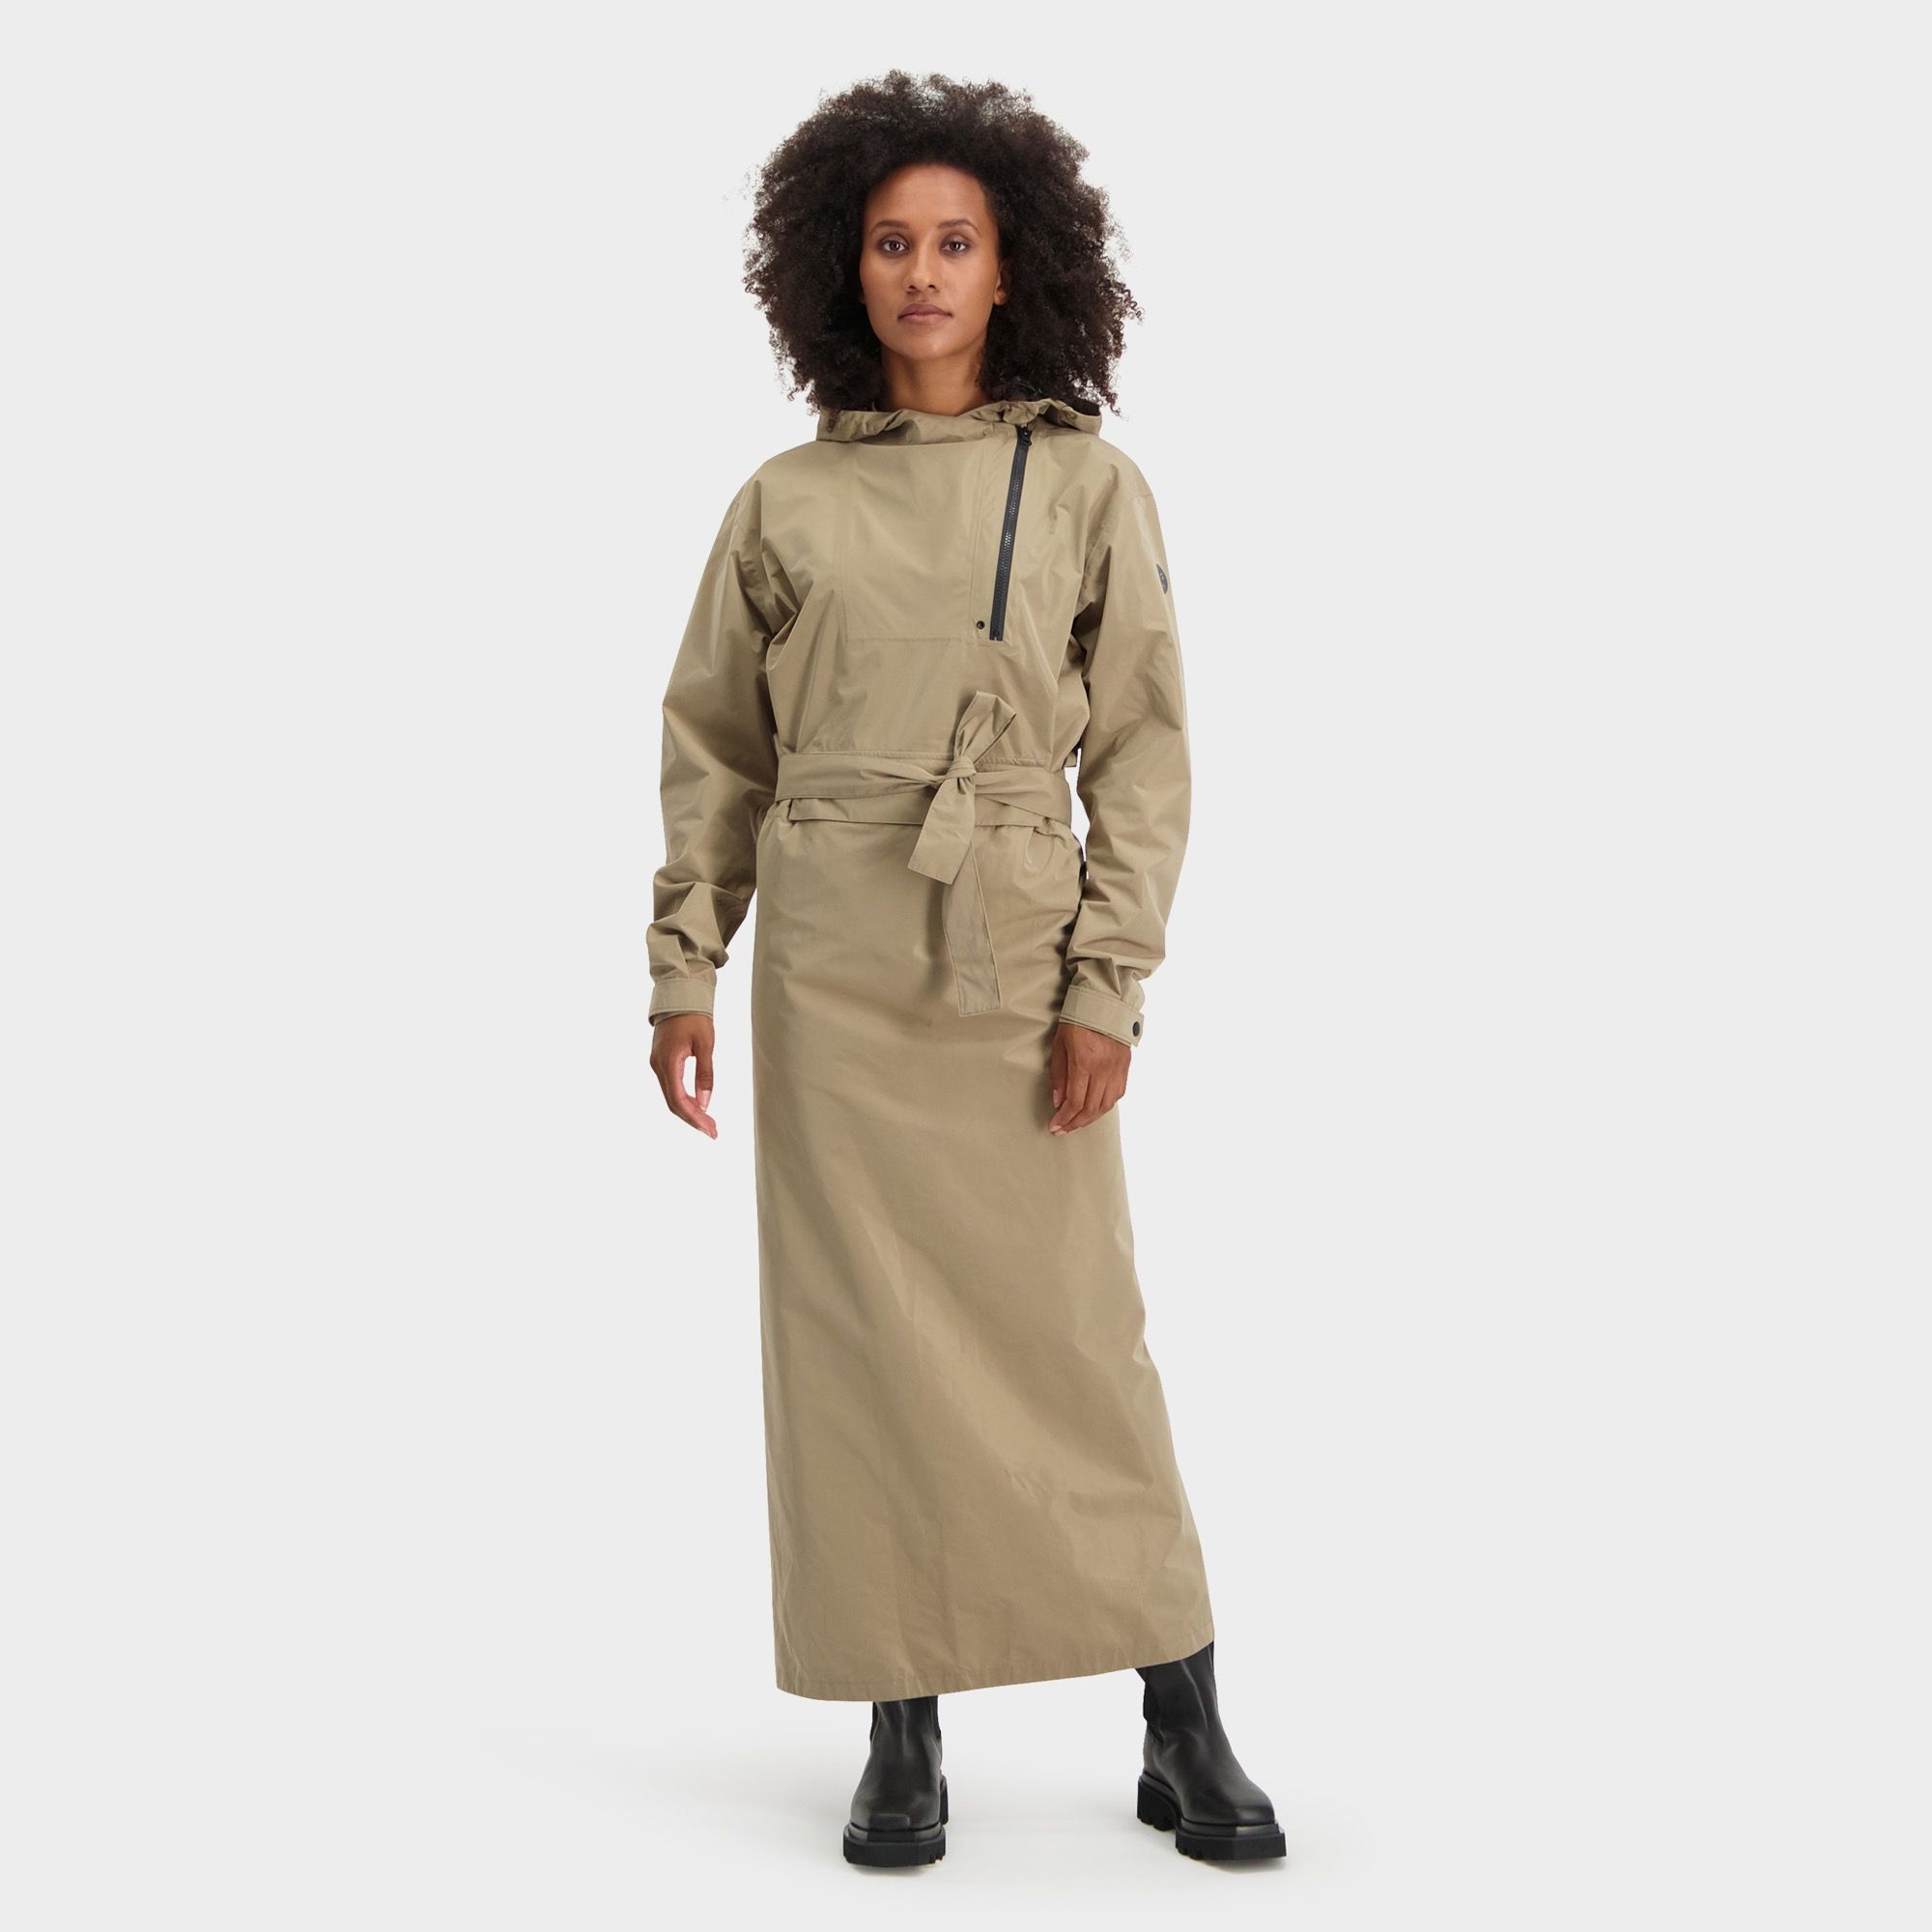 Rain Dress Anorak Urban Outdoor Women fit example